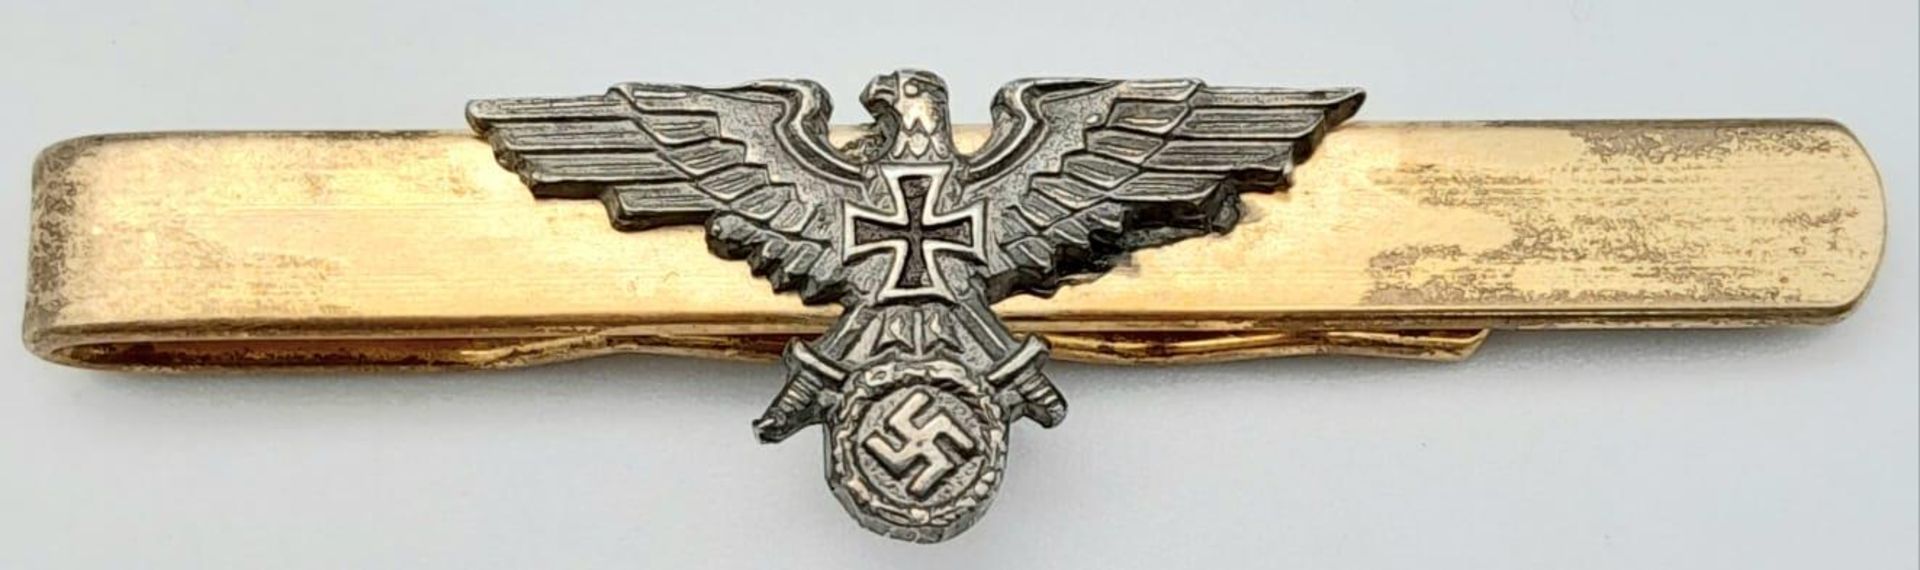 A WW2 German Veterans Tie Pin.